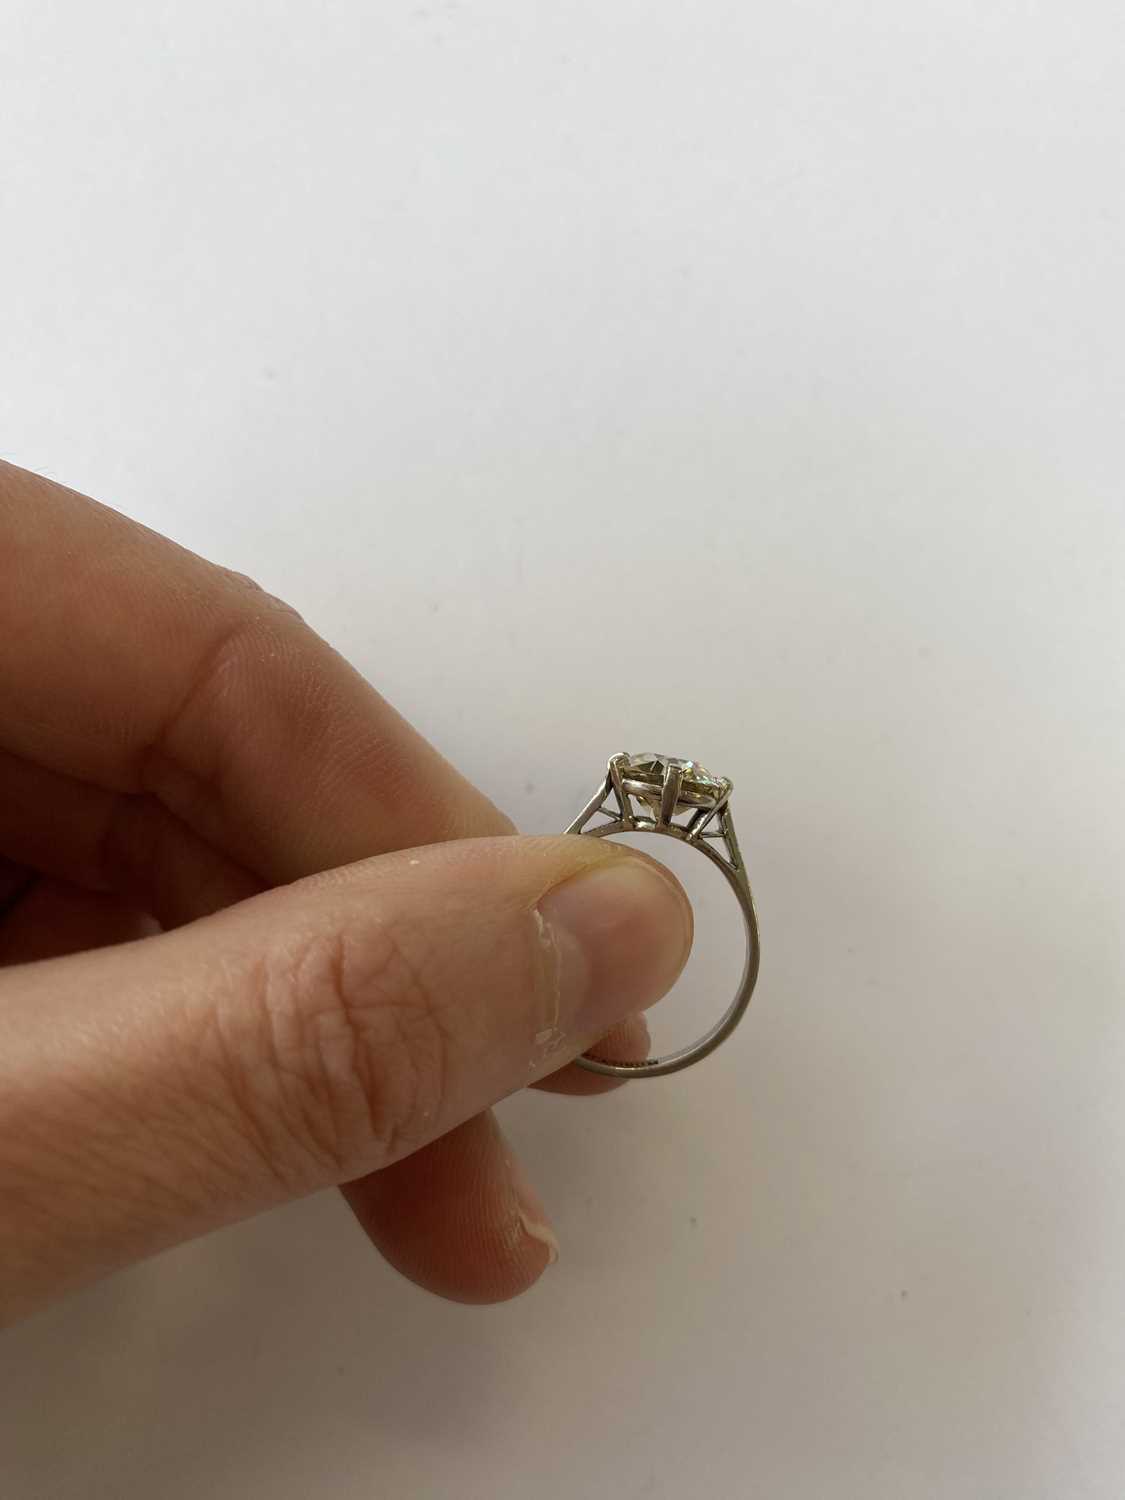 An early 20th century single stone diamond ring - Image 7 of 14